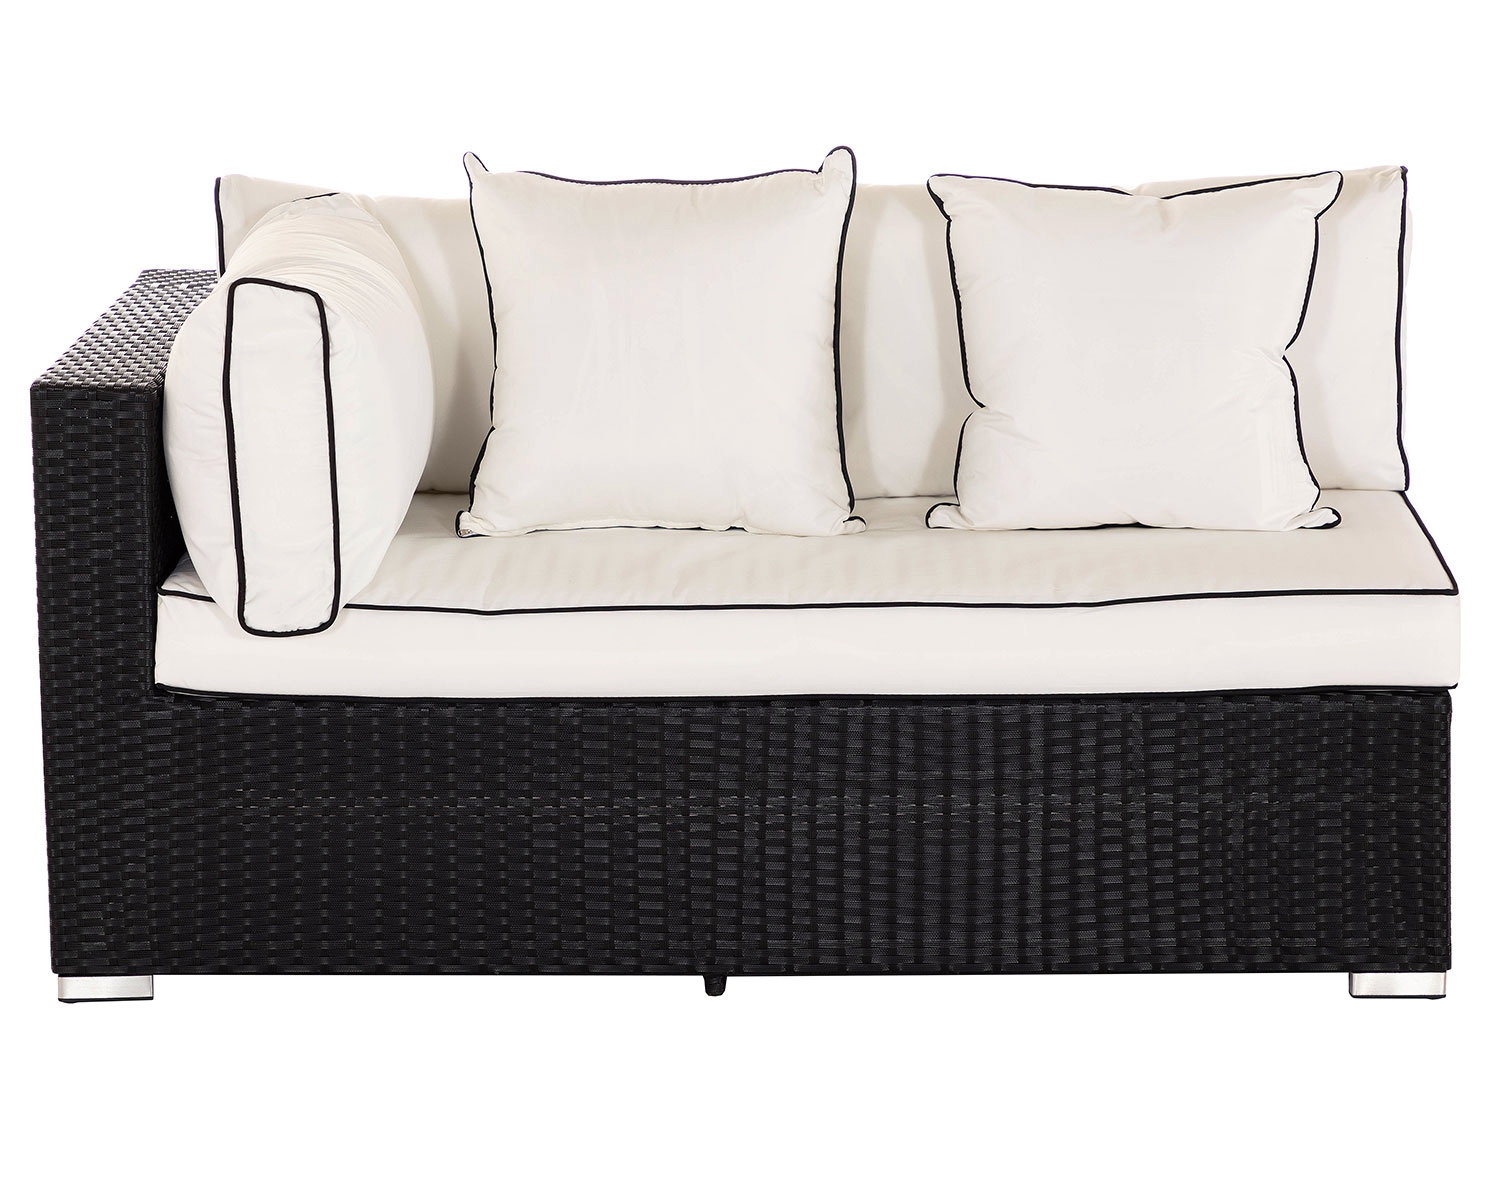 Rectangular Right As You Sit Rattan Garden Sofa In Black Amp White Monaco Rattan Direct